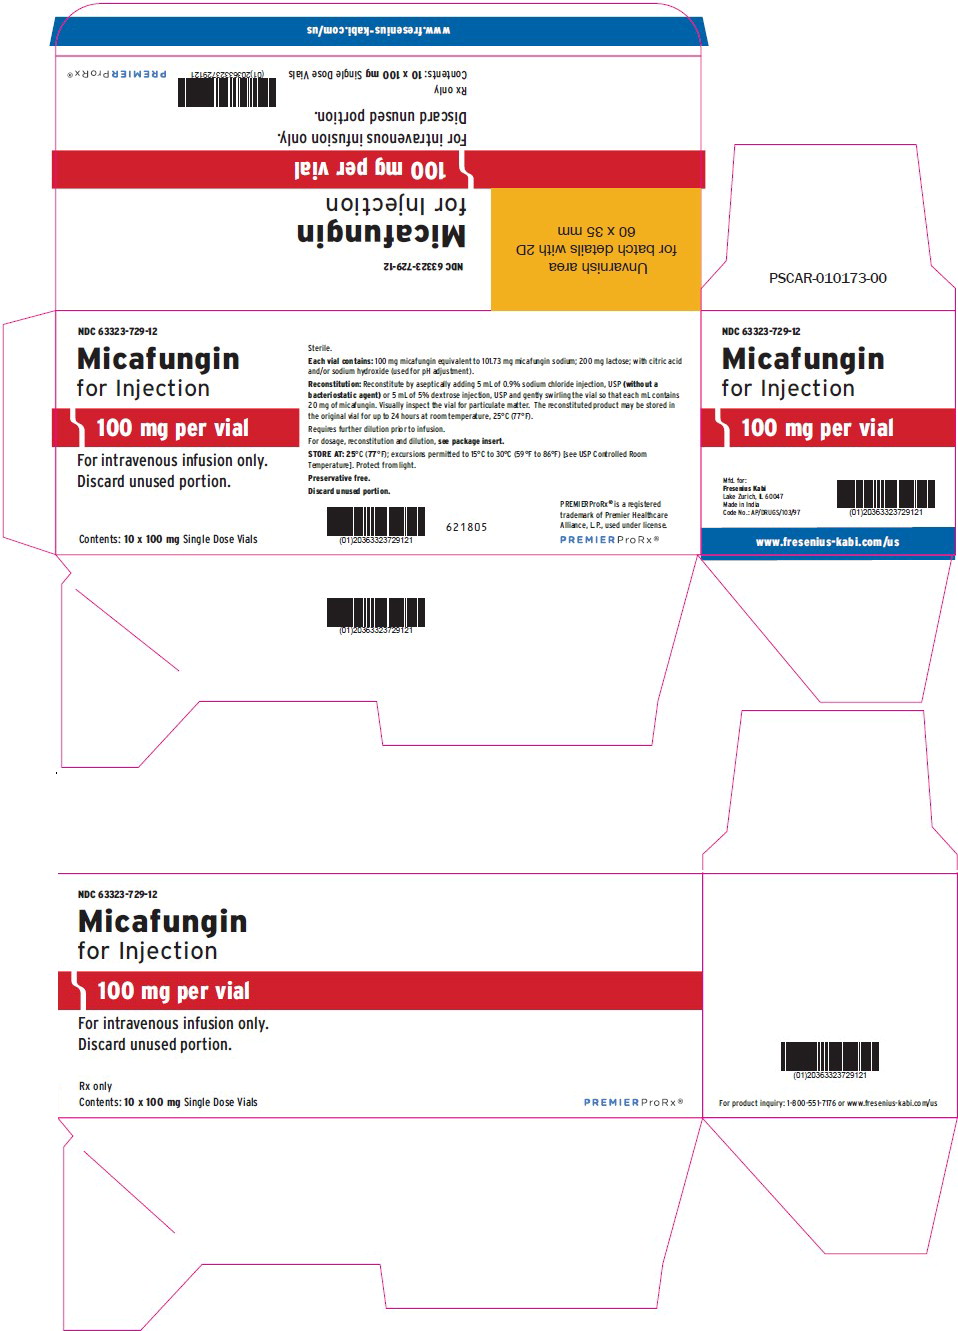 Principal Display Panel – Micafungin for Injection 50 mg – Shelf Carton
